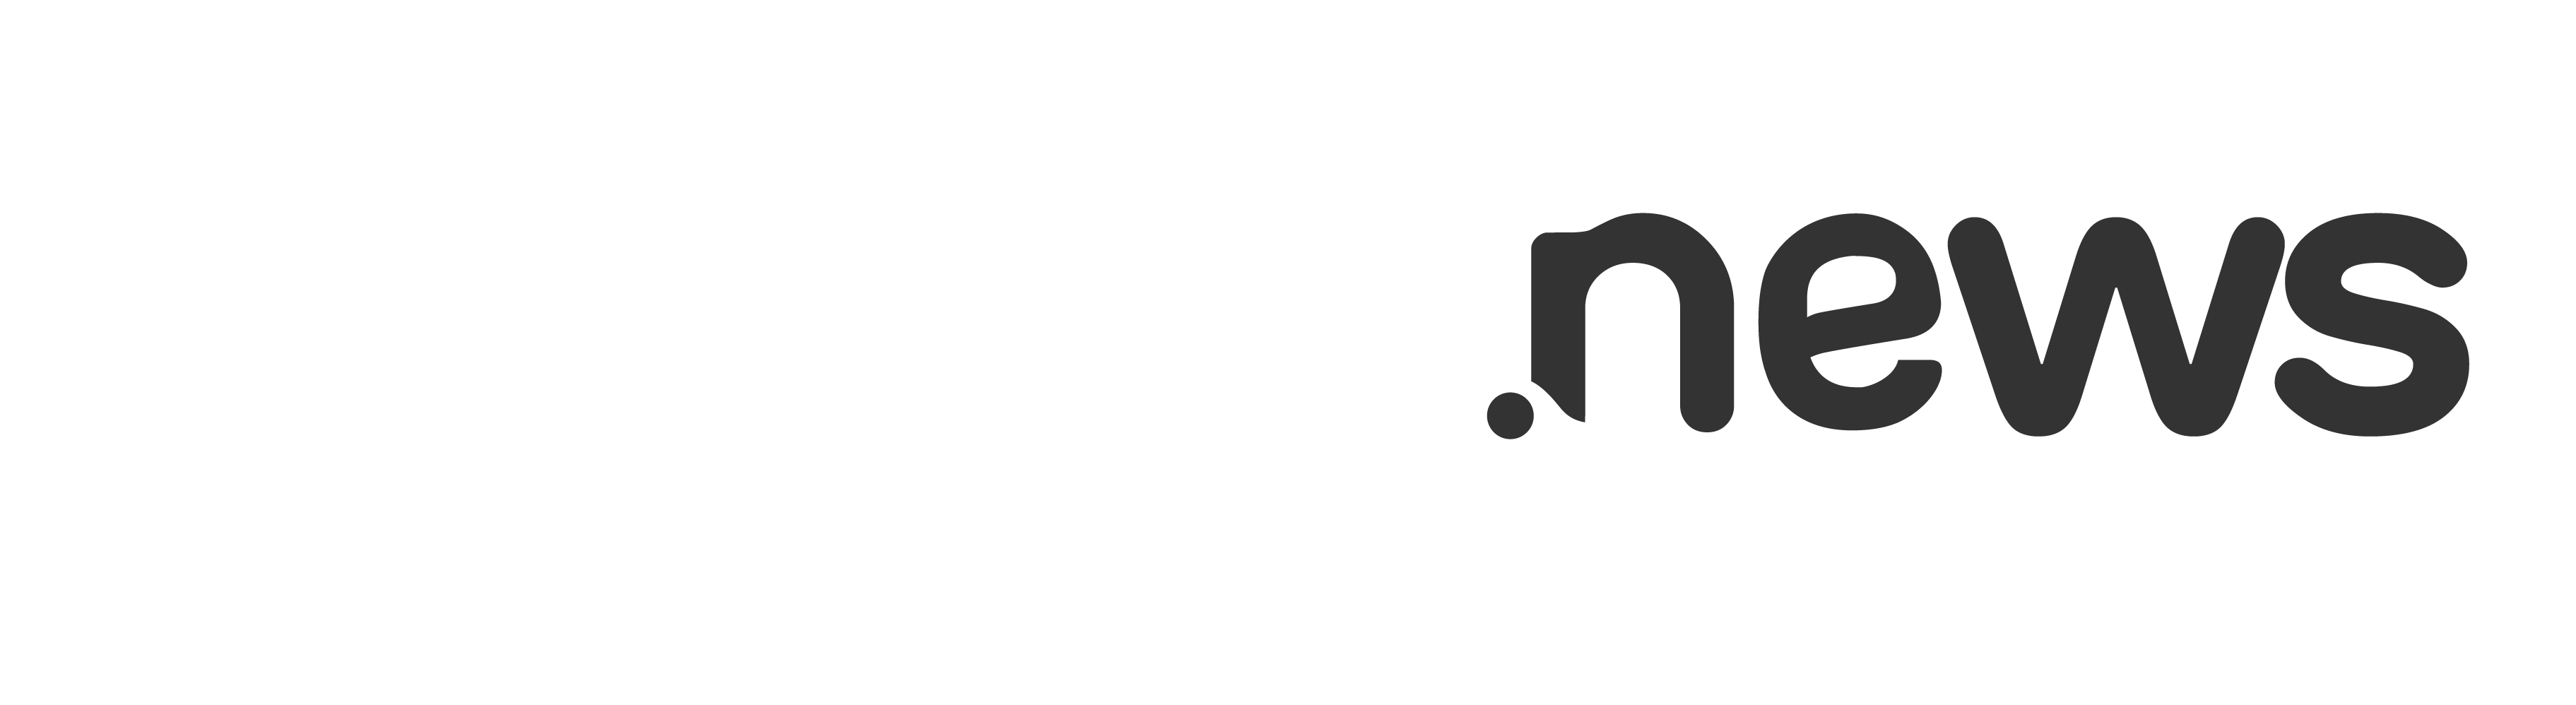 yooga-news-logo